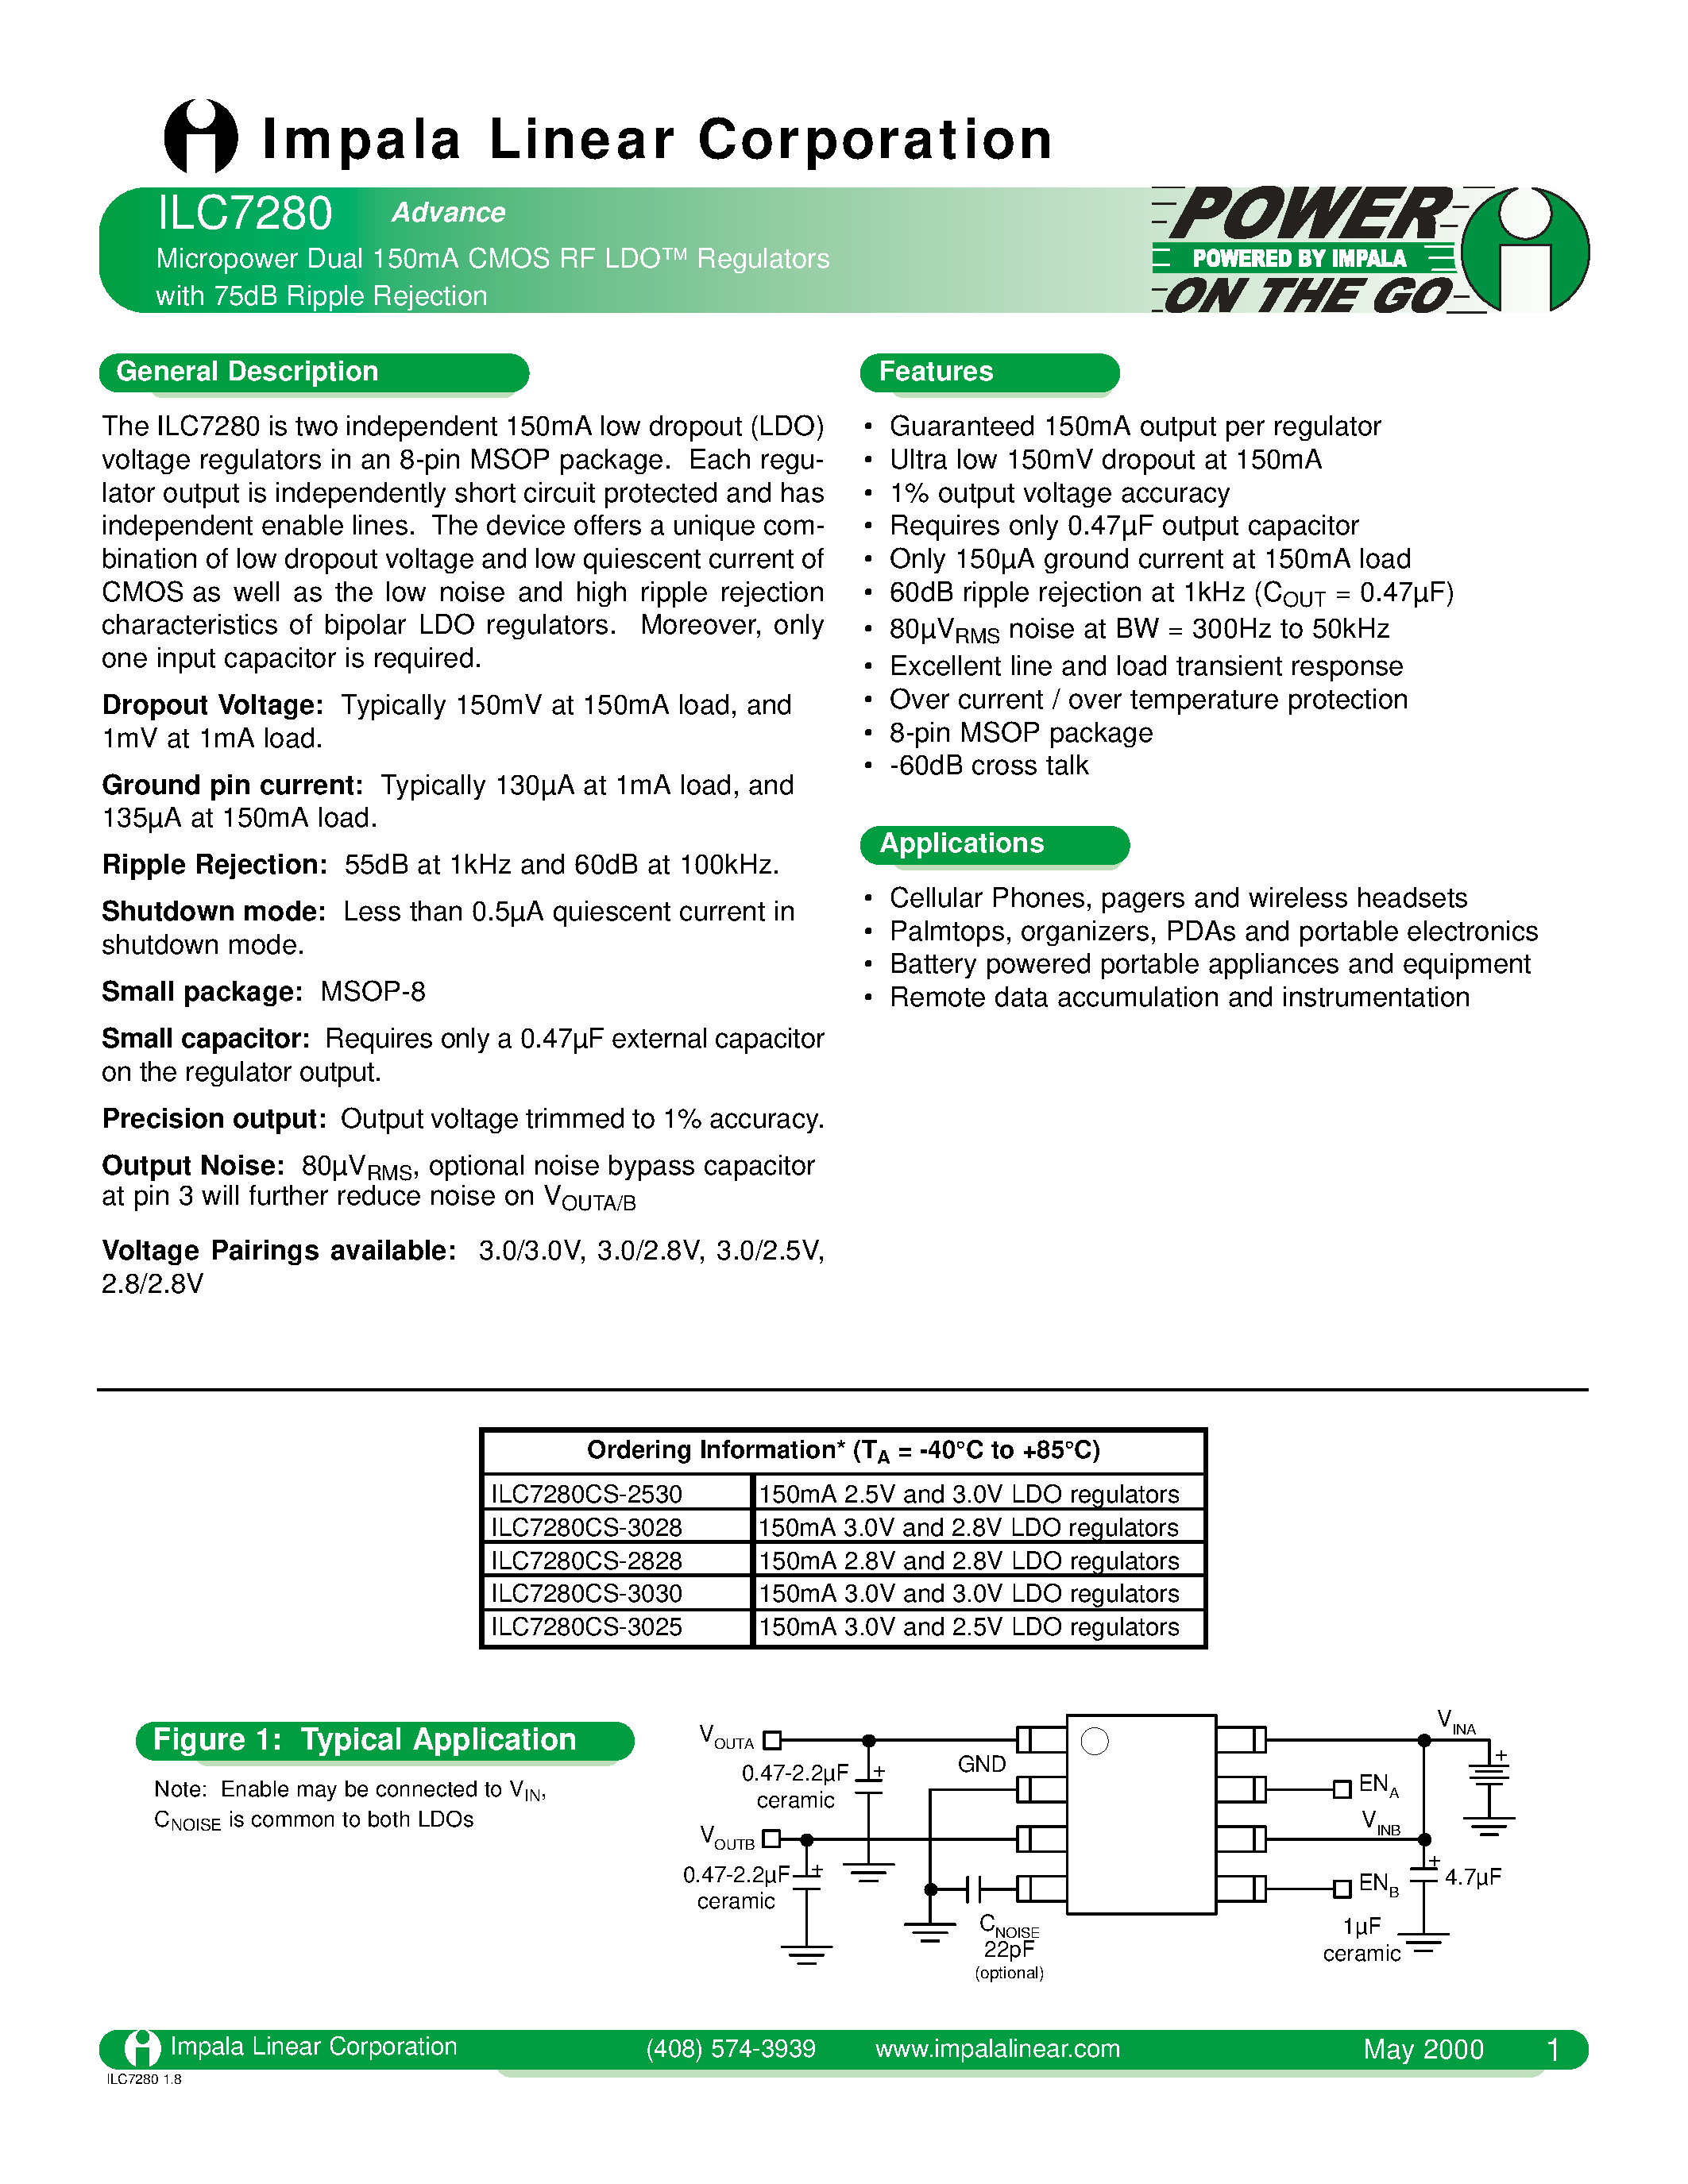 Даташит ILC7280CS-3030 - MICROPOWER DUAL 150MA CMOS RF LDO REGULATORS WITH 75DB RIPPLE REJECTION страница 1